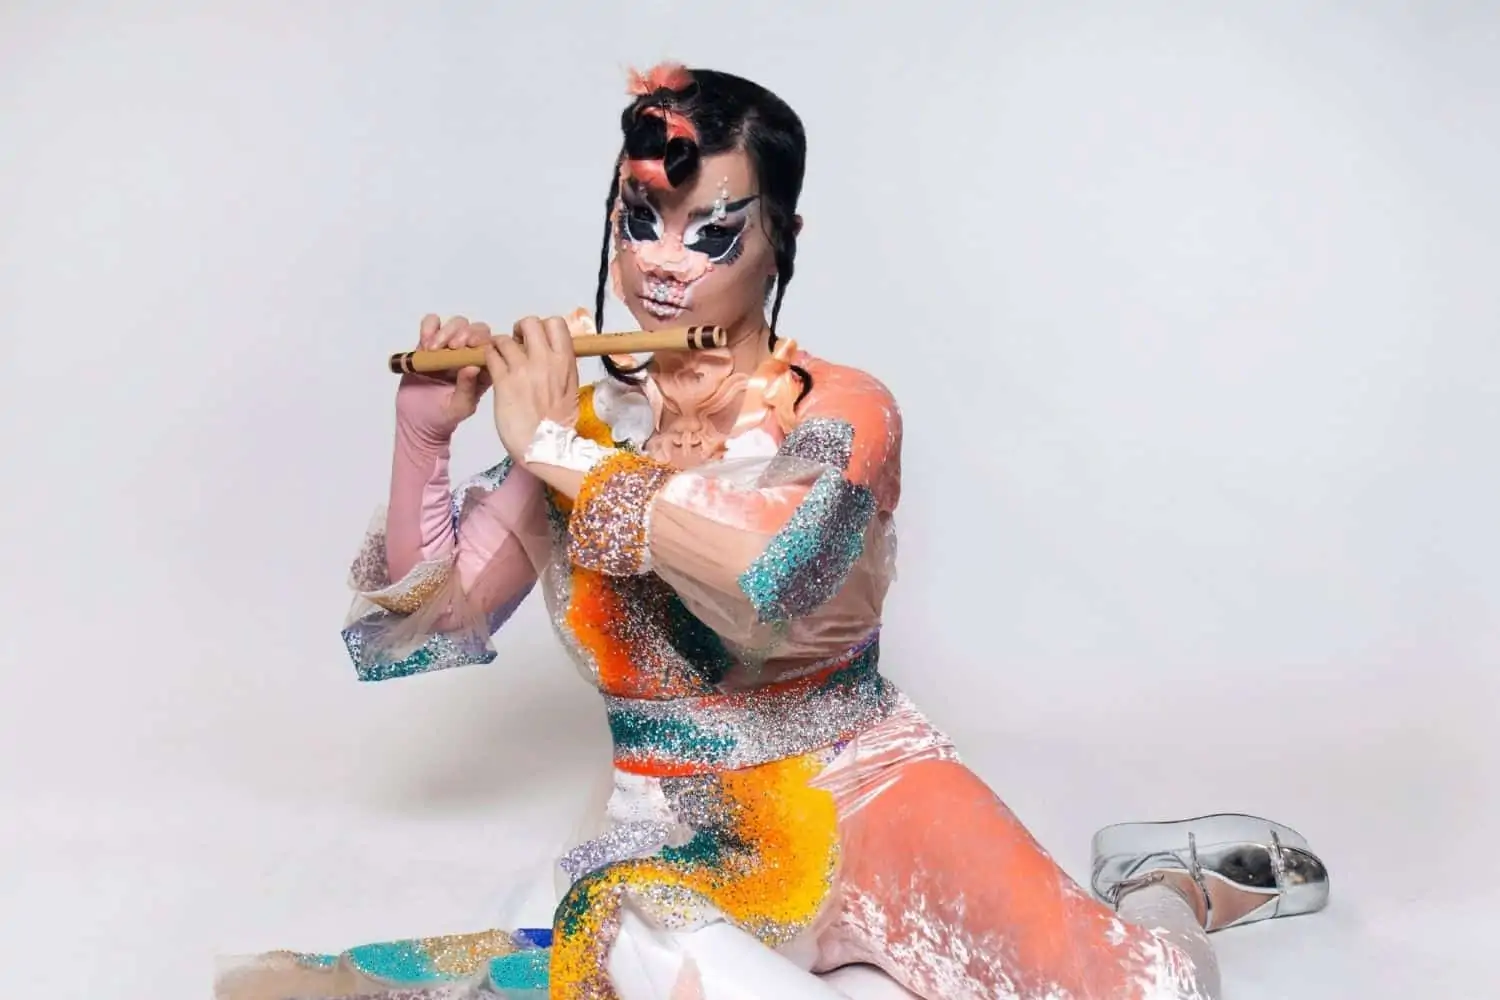 Celebrating Björk as she celebrates her birthday